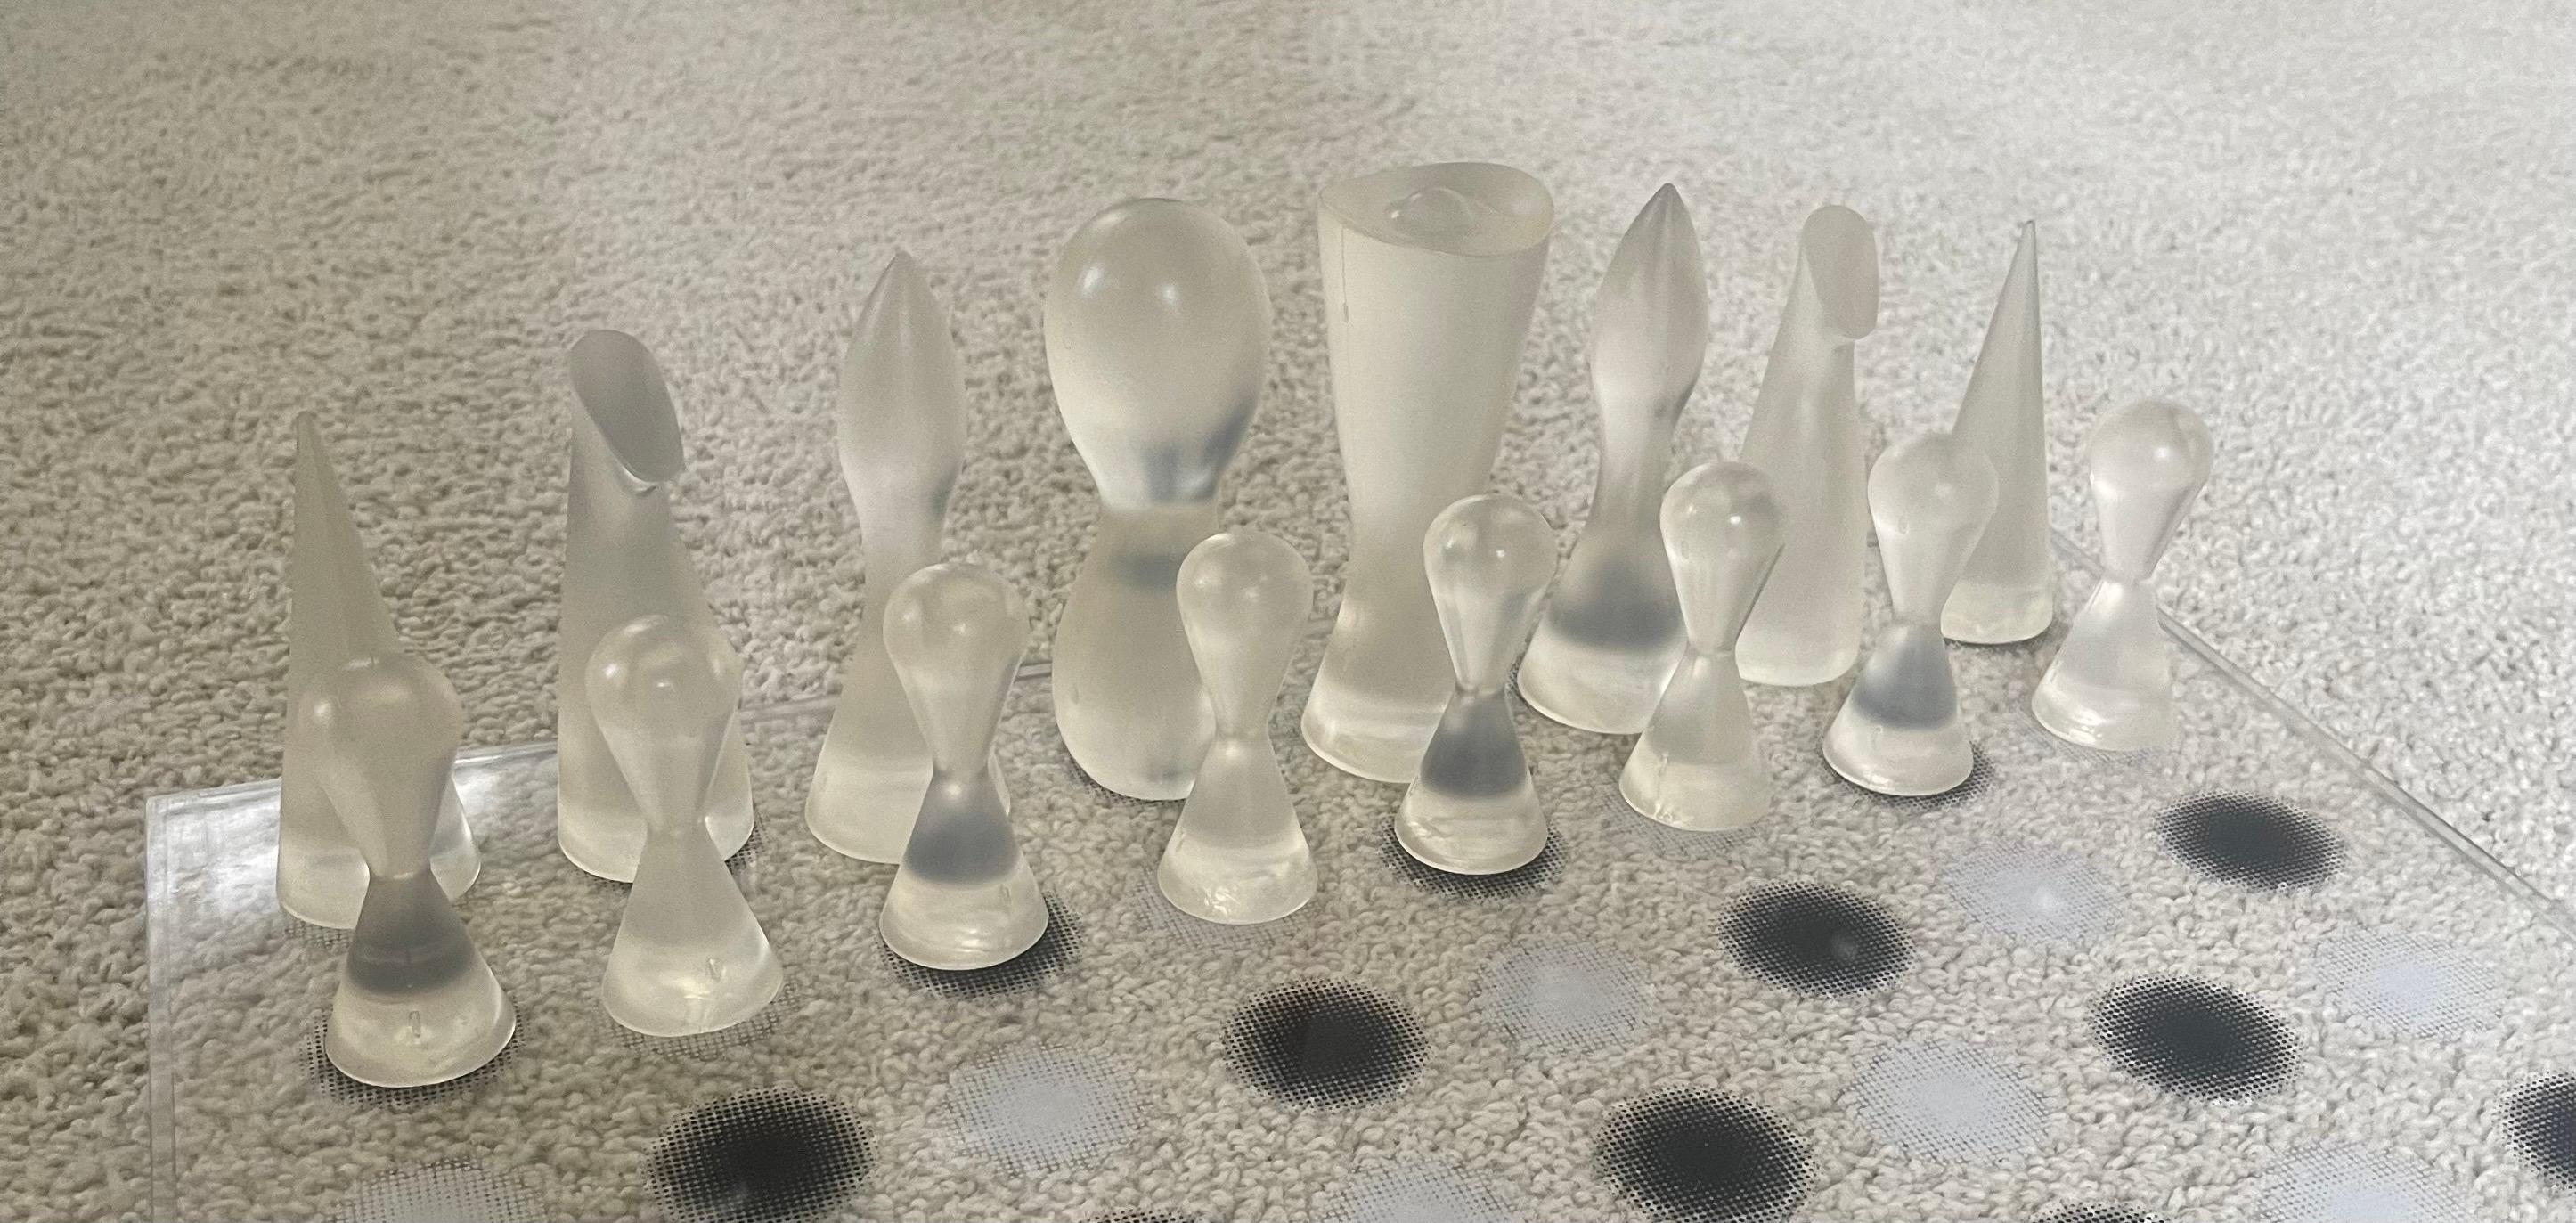 Acrylic & Rubber Modern Chess Set by Karim Rashid 3